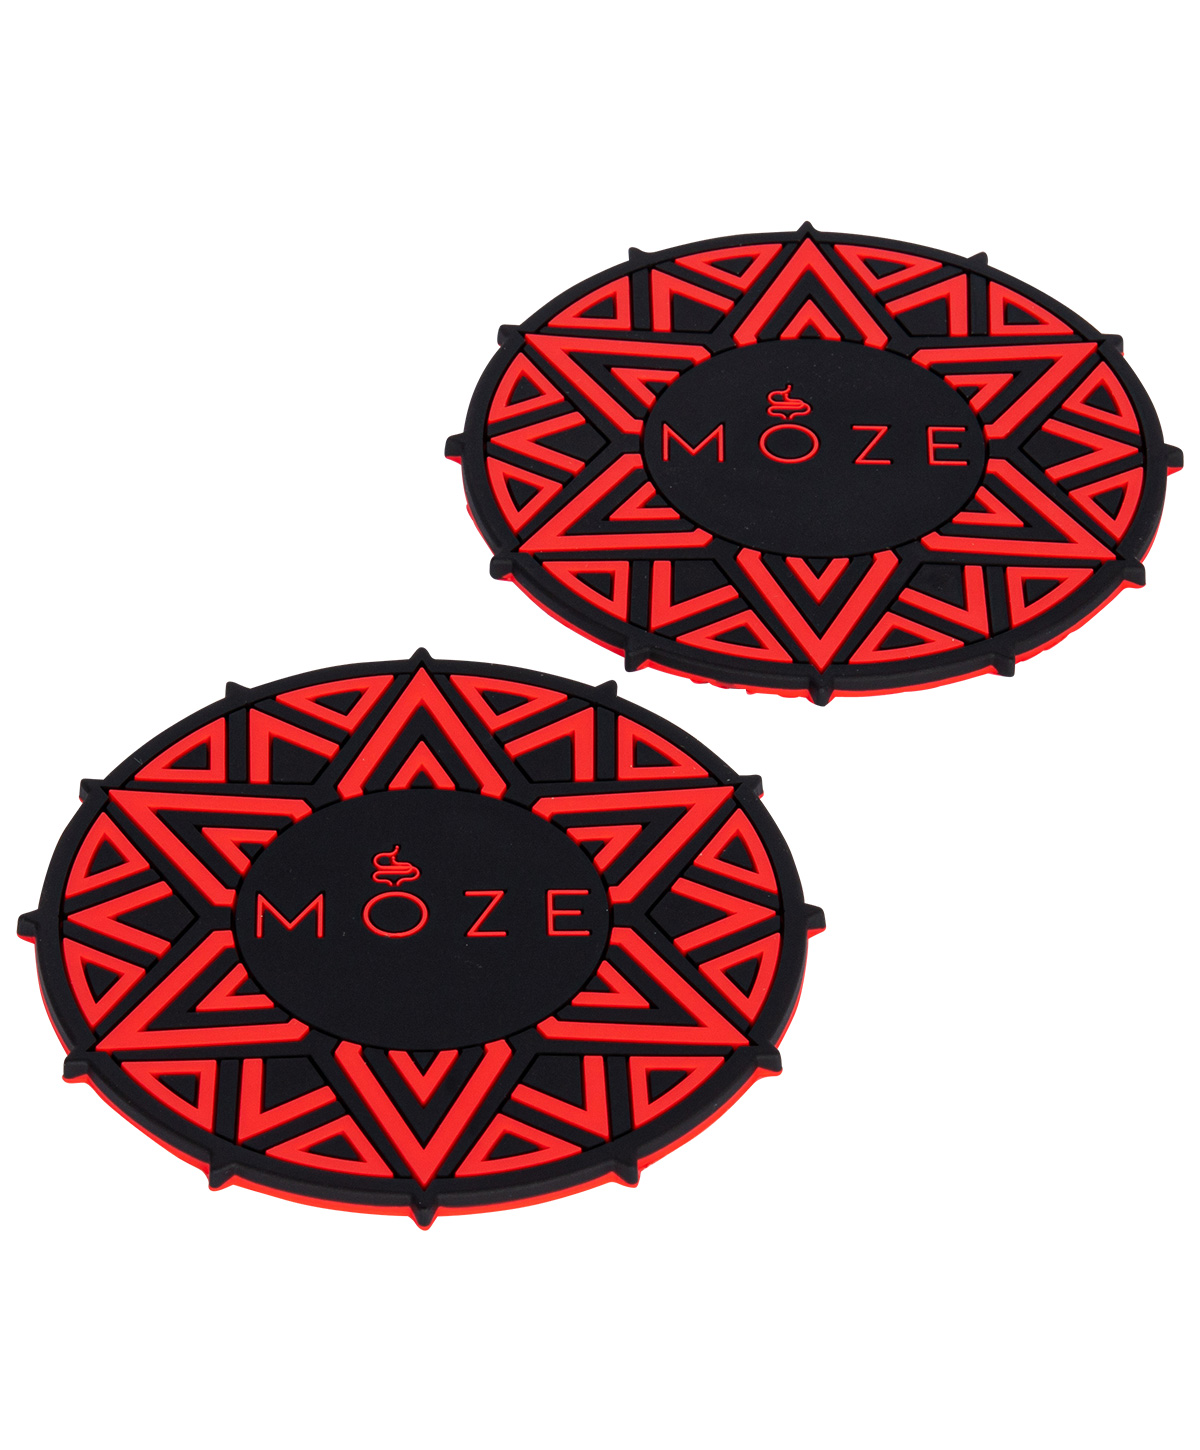 Moze Drinking glass coaster (2er Set) - Red